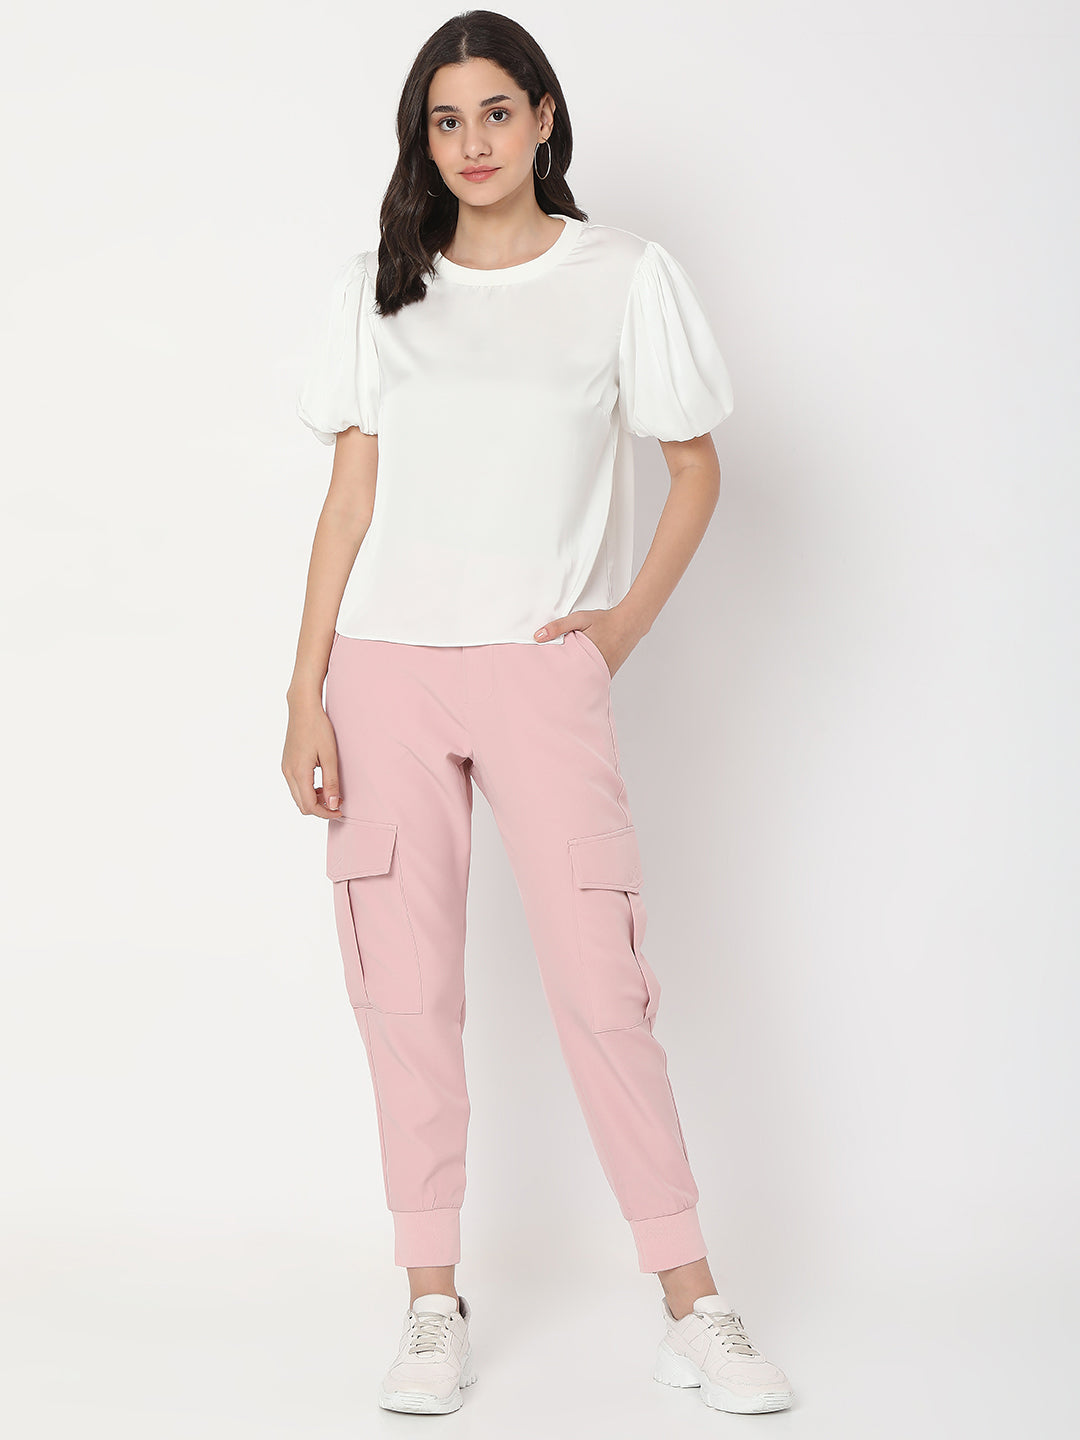 Spykar Powder Pink Cotton Regular Fit Trackpants For Women